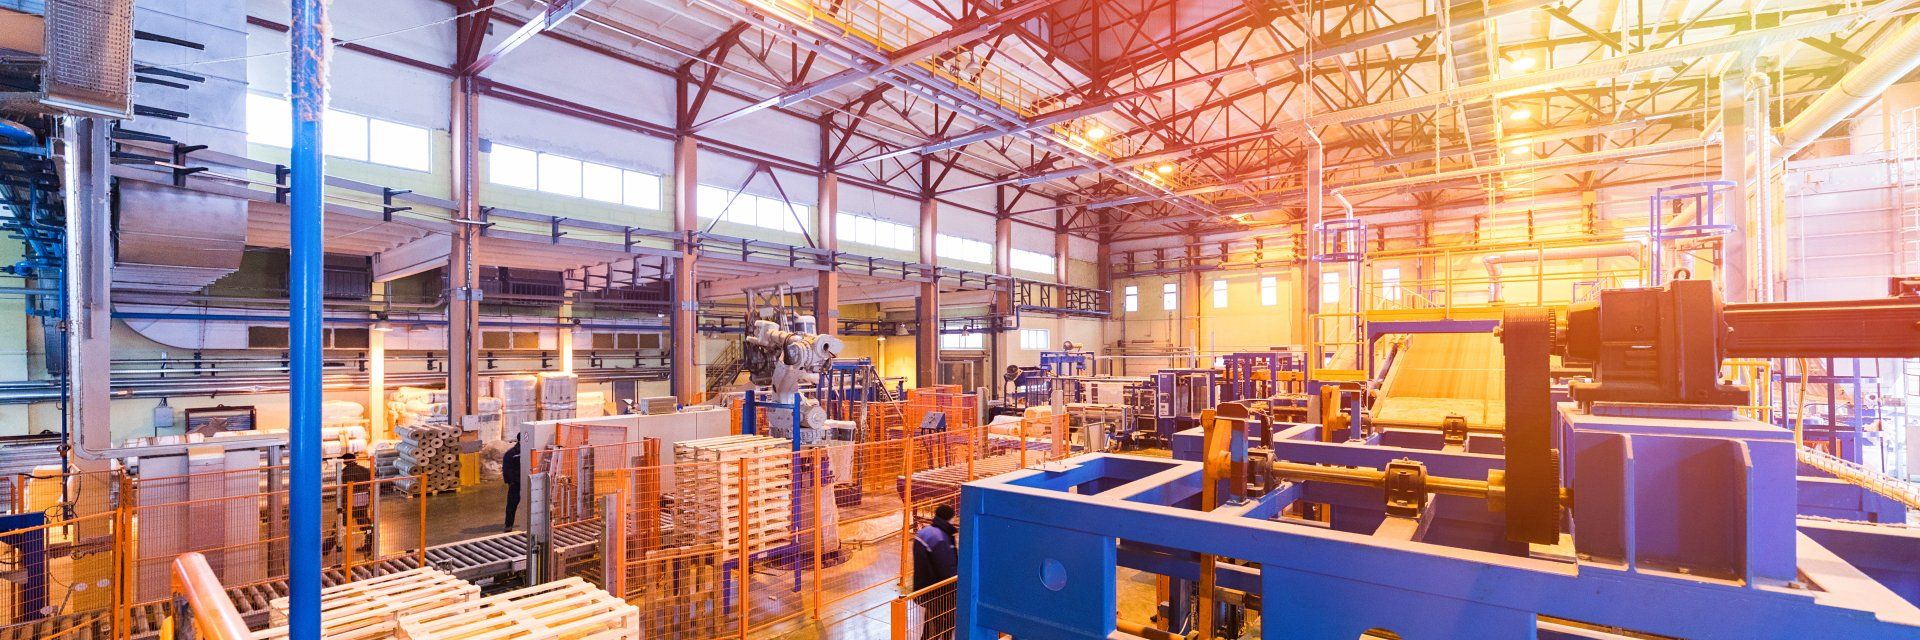 fiberglass production industry equipment manufacture